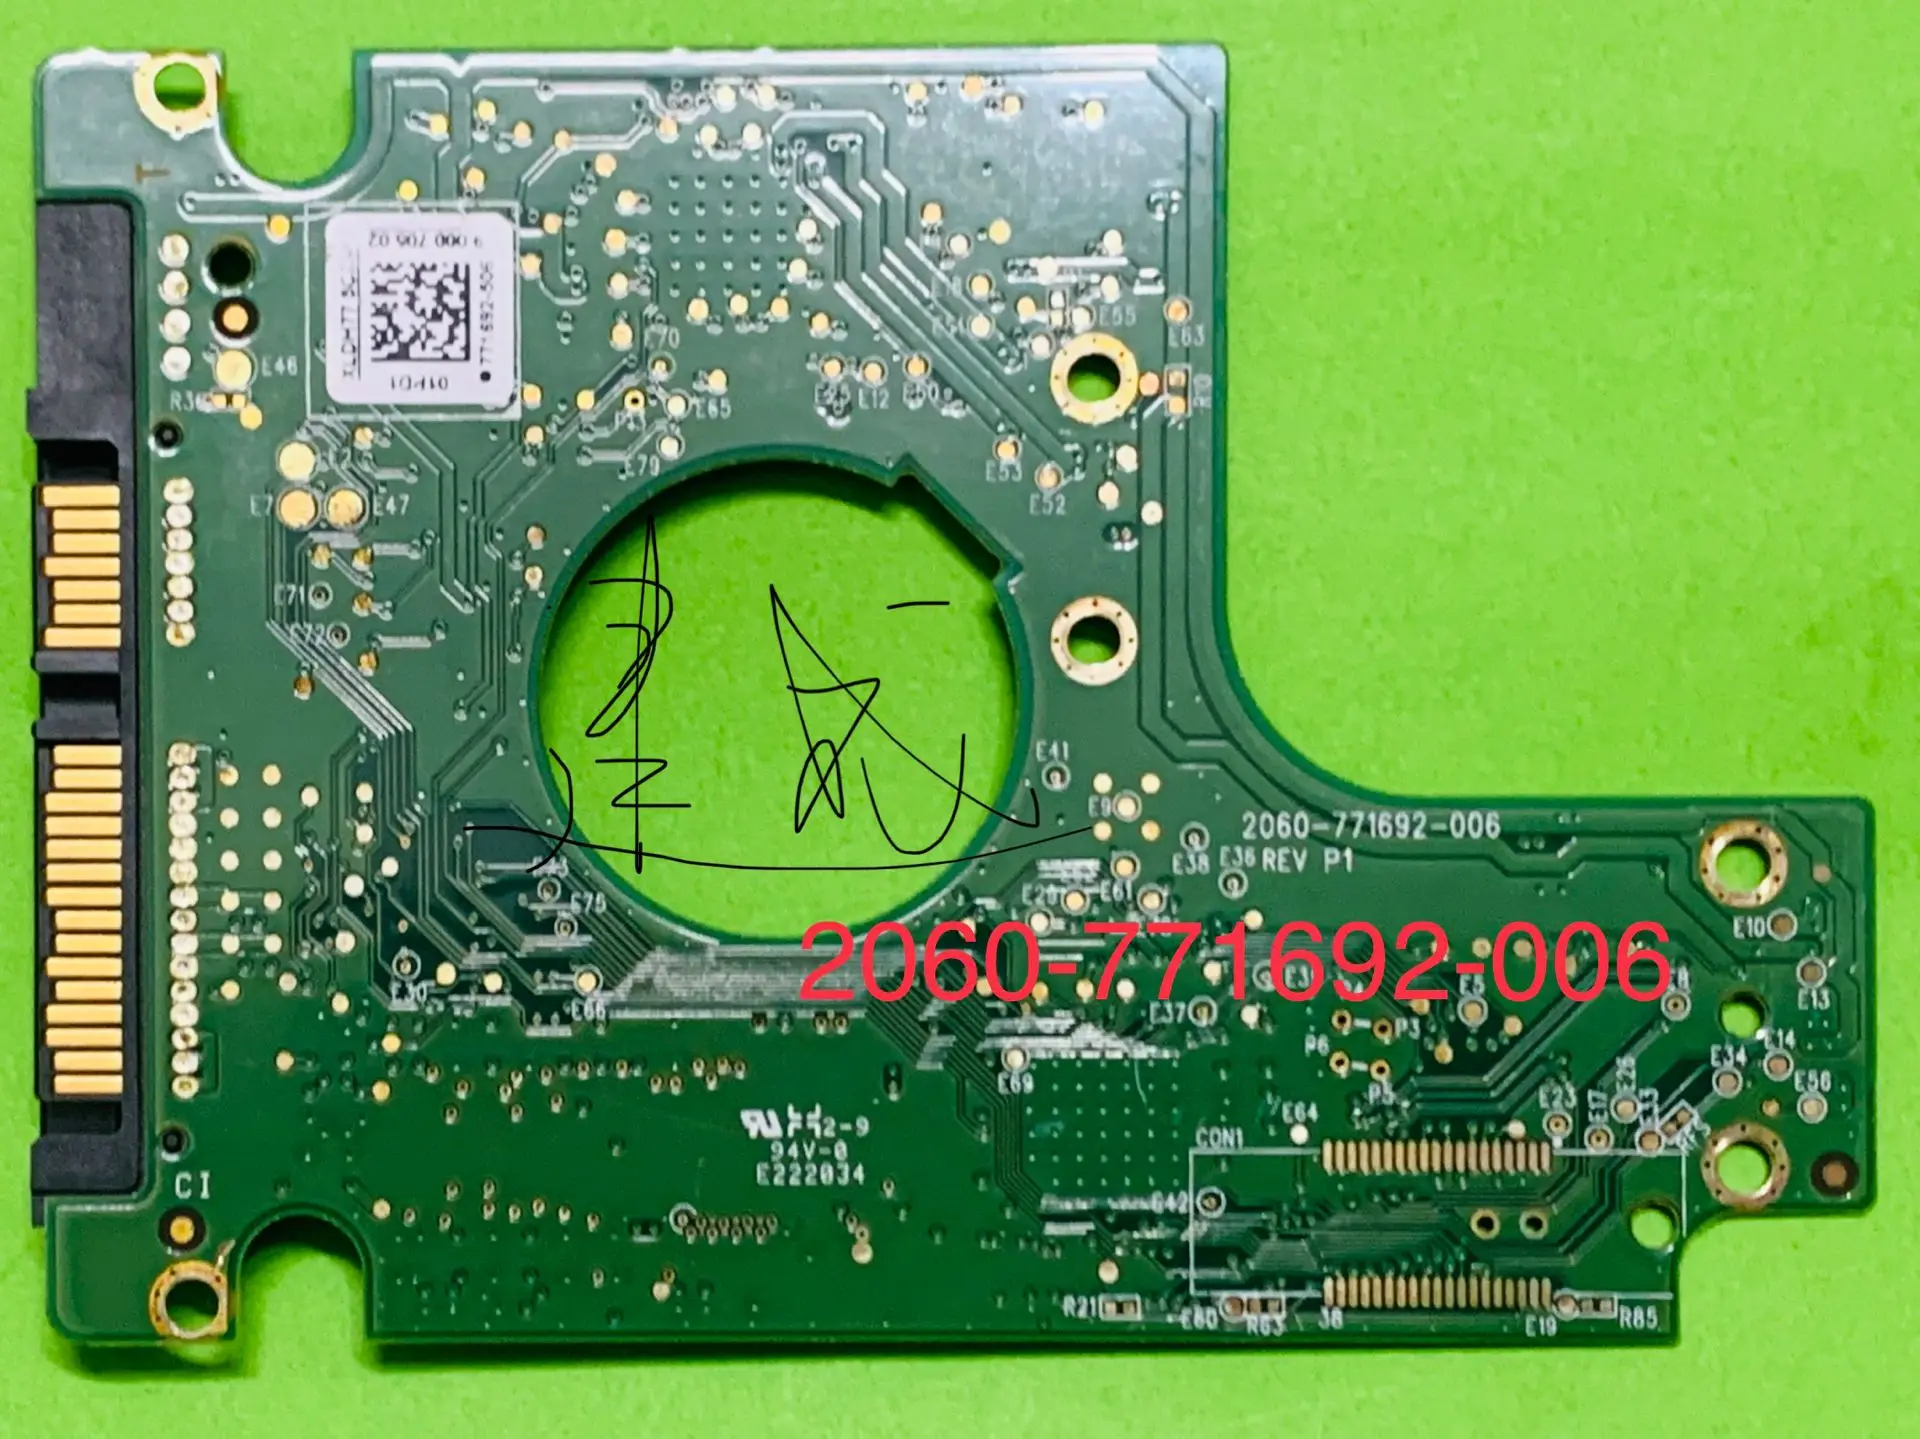 Western hard disk circuit board WD5000BPVT wd5000lmvw 2060-771692-006